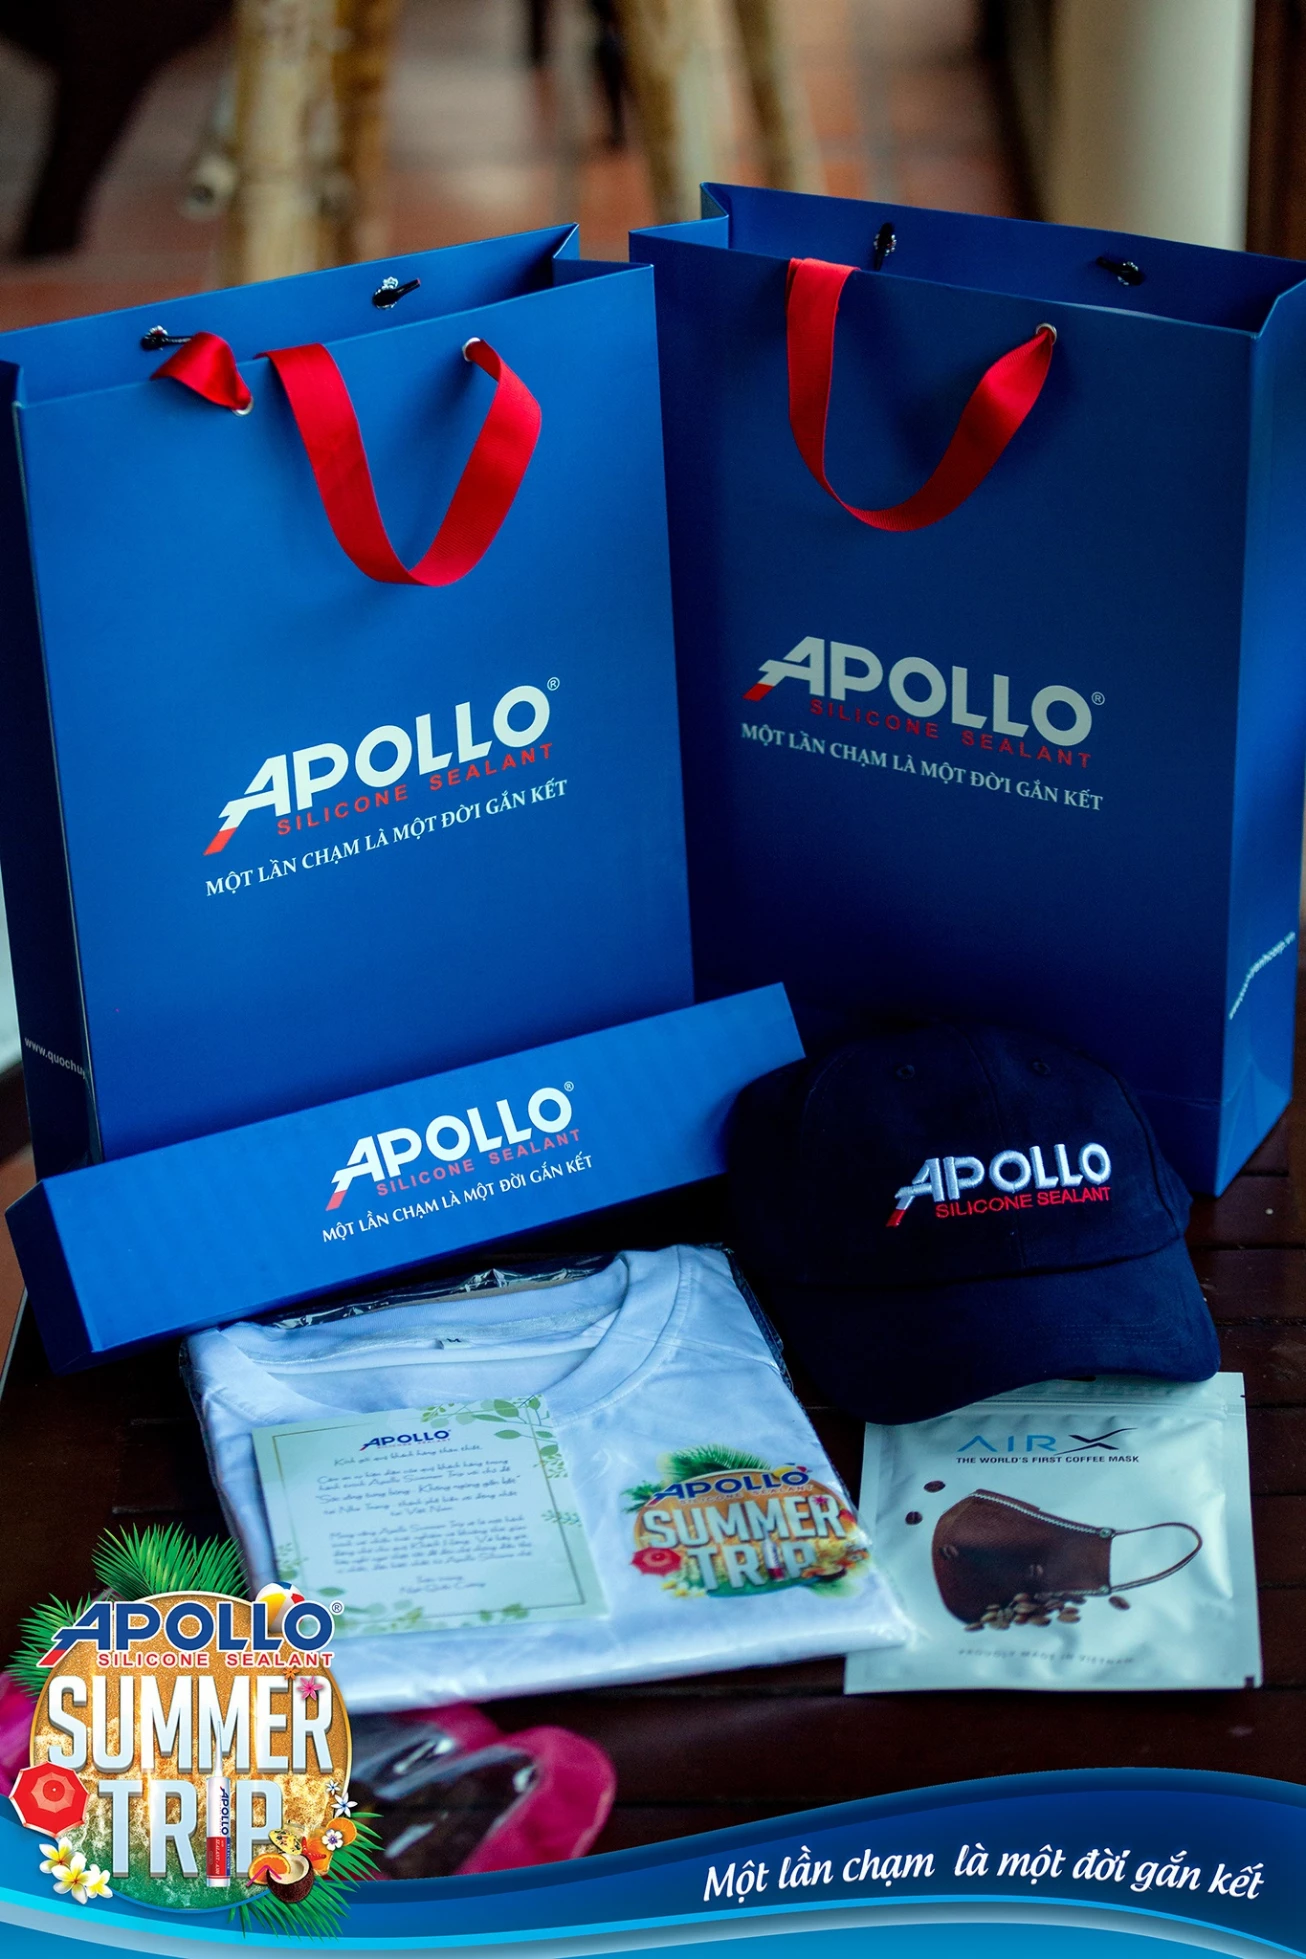 Apollo summer trip - The bonding reunion of loyal customers